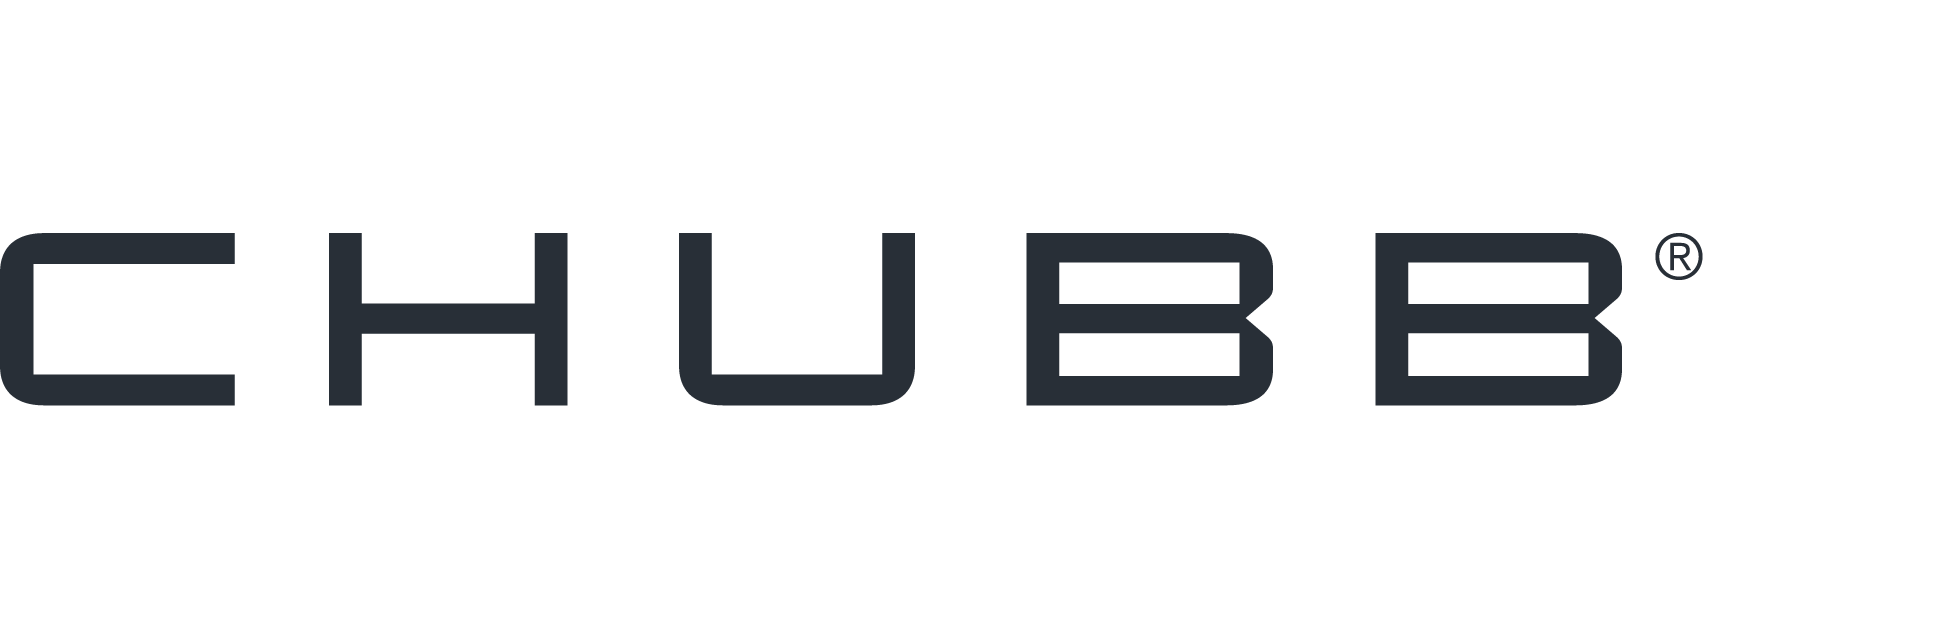 Logo CHUBB